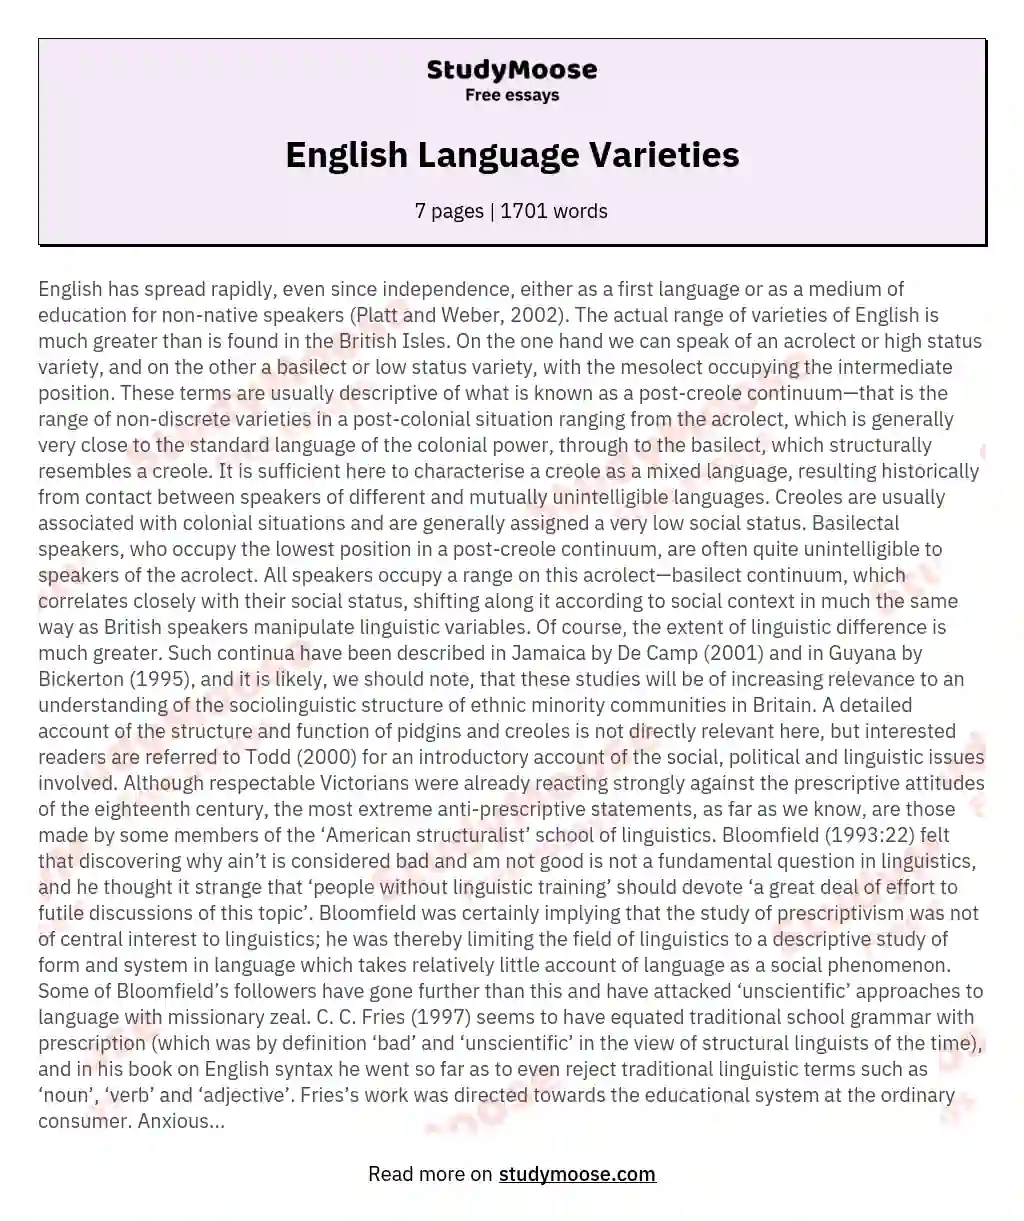 English Language Varieties essay